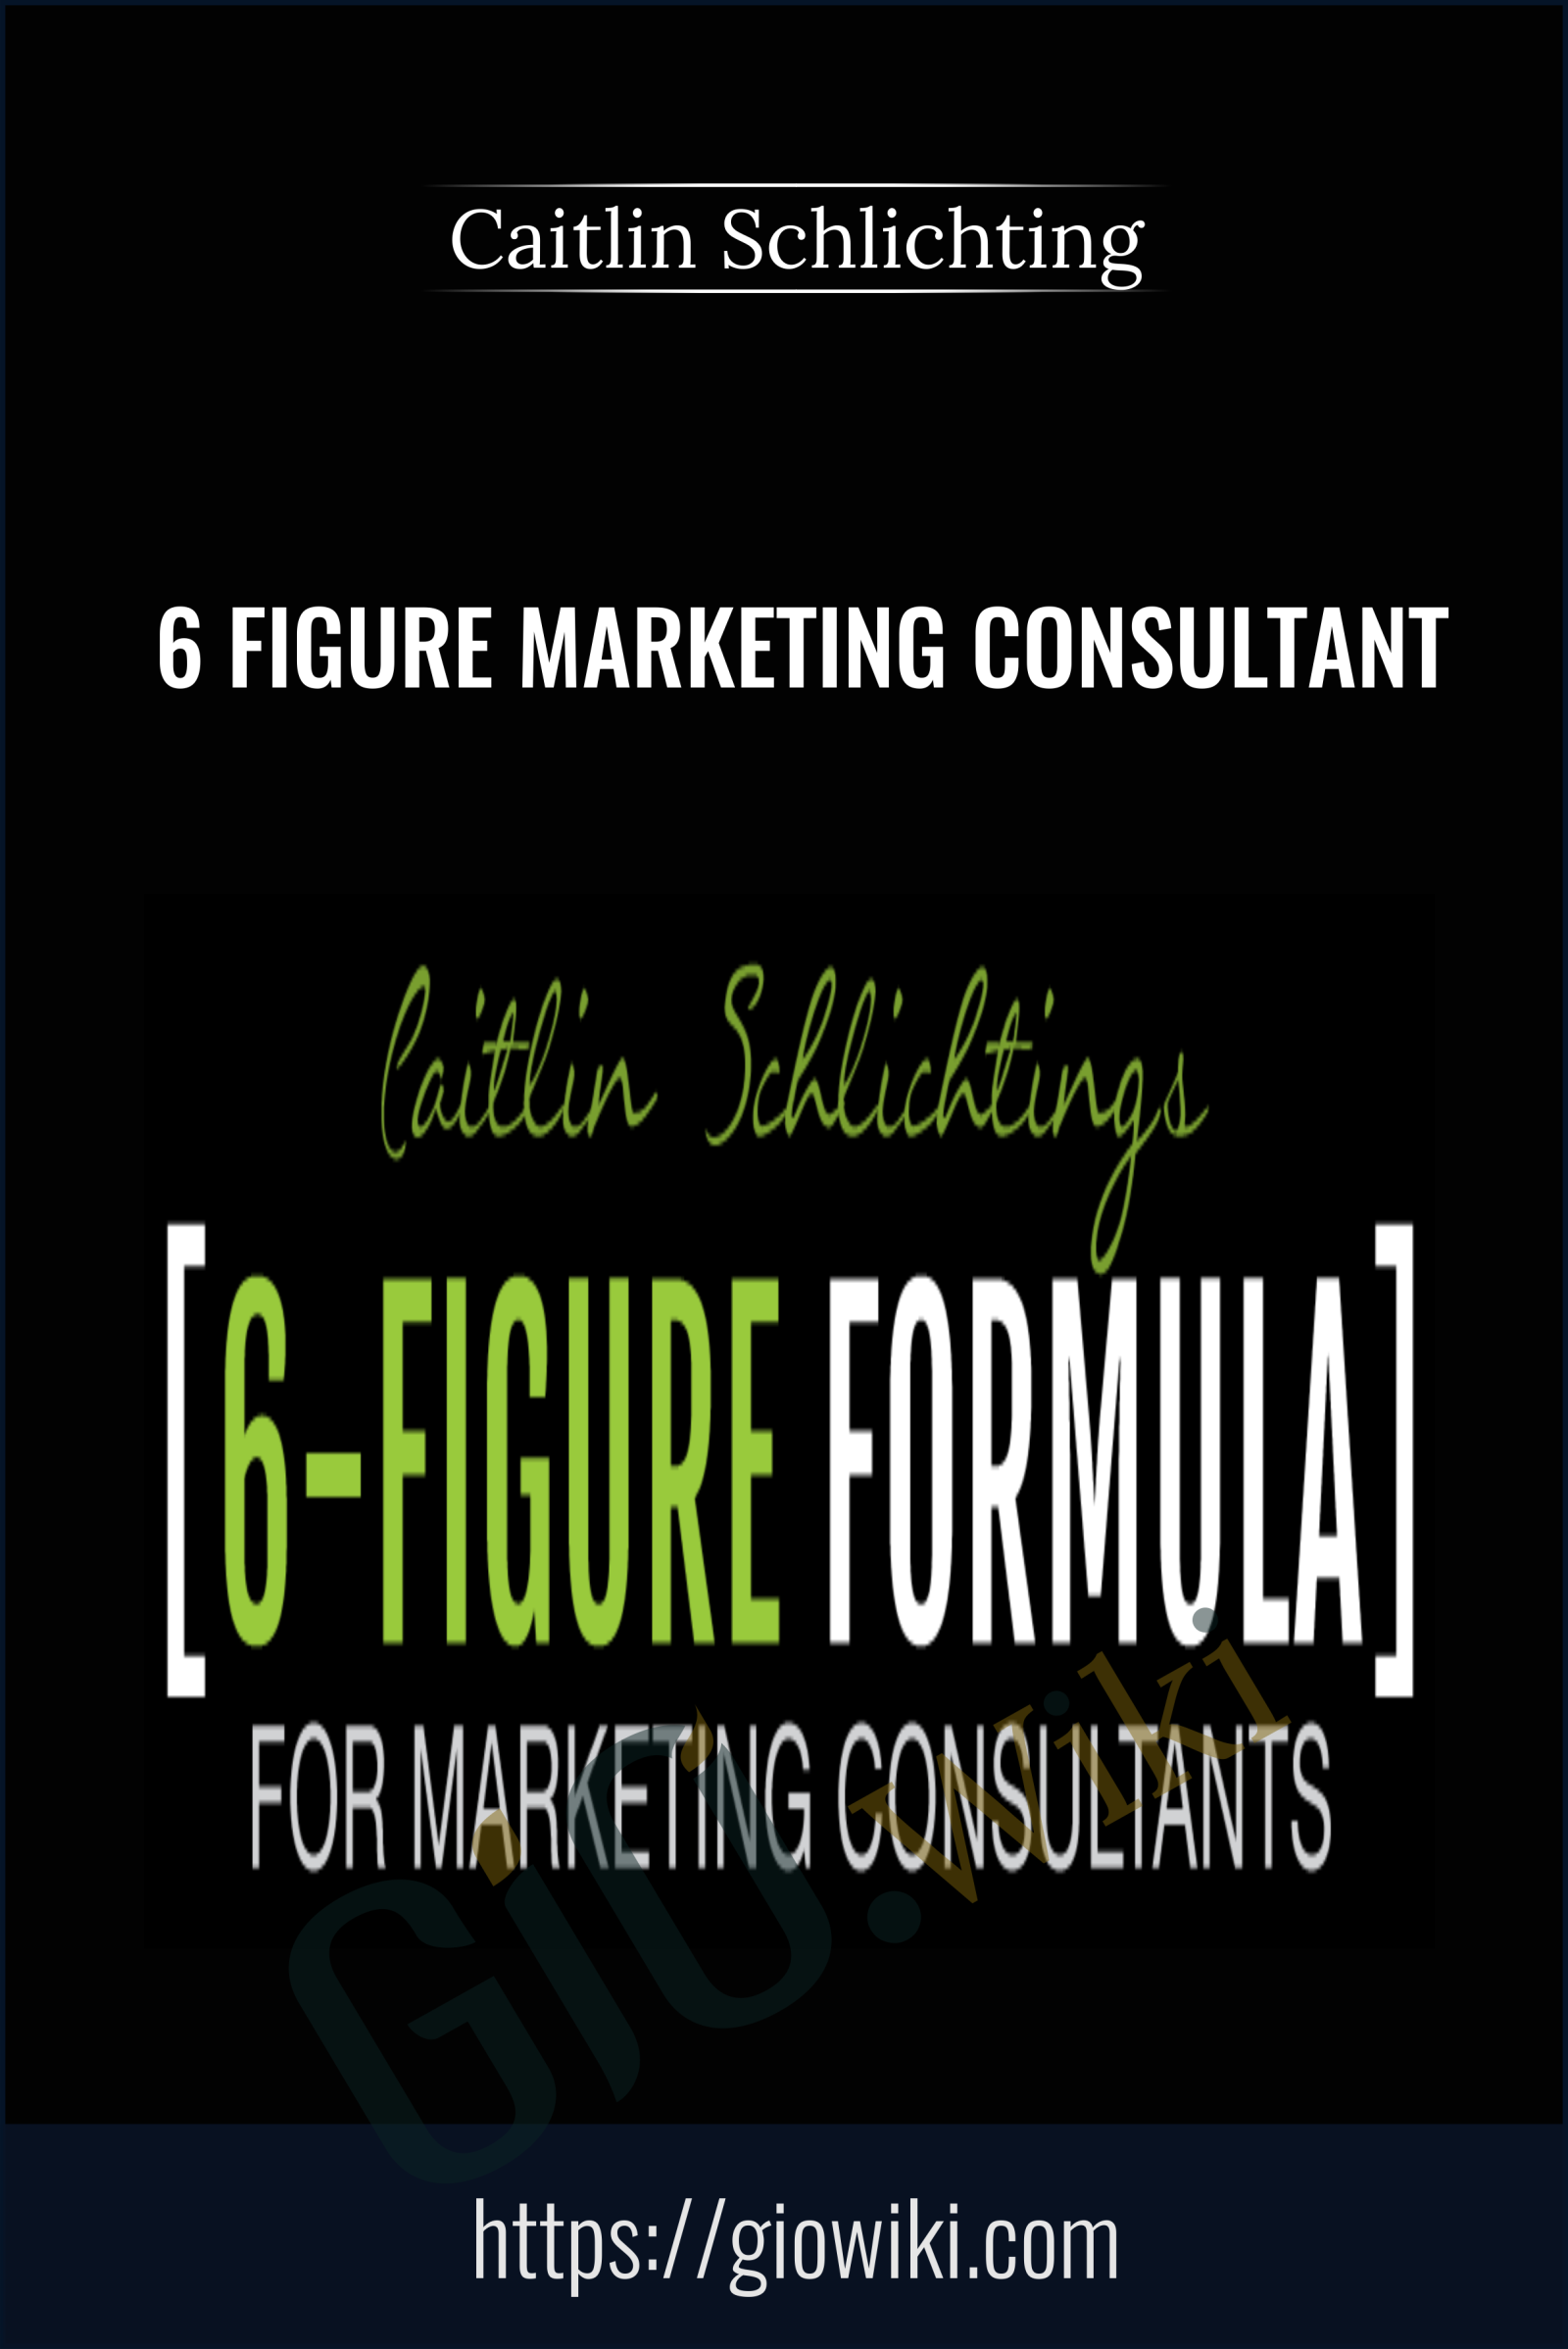 6 Figure Marketing Consultant - Caitlin Schlichting